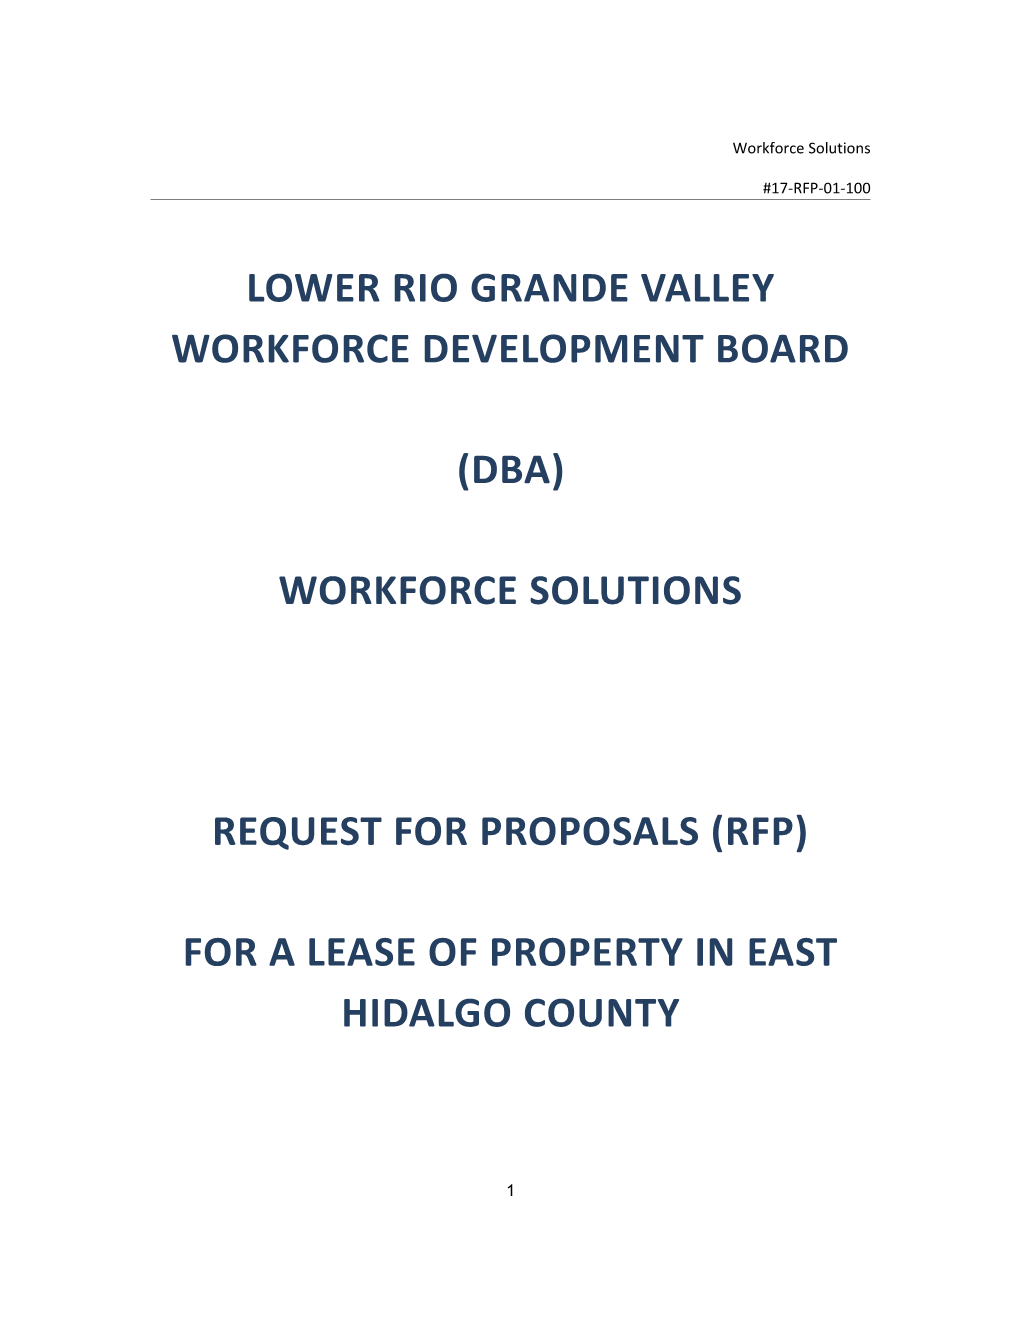 Lower Rio Grande Valley Workforce Development Board s1